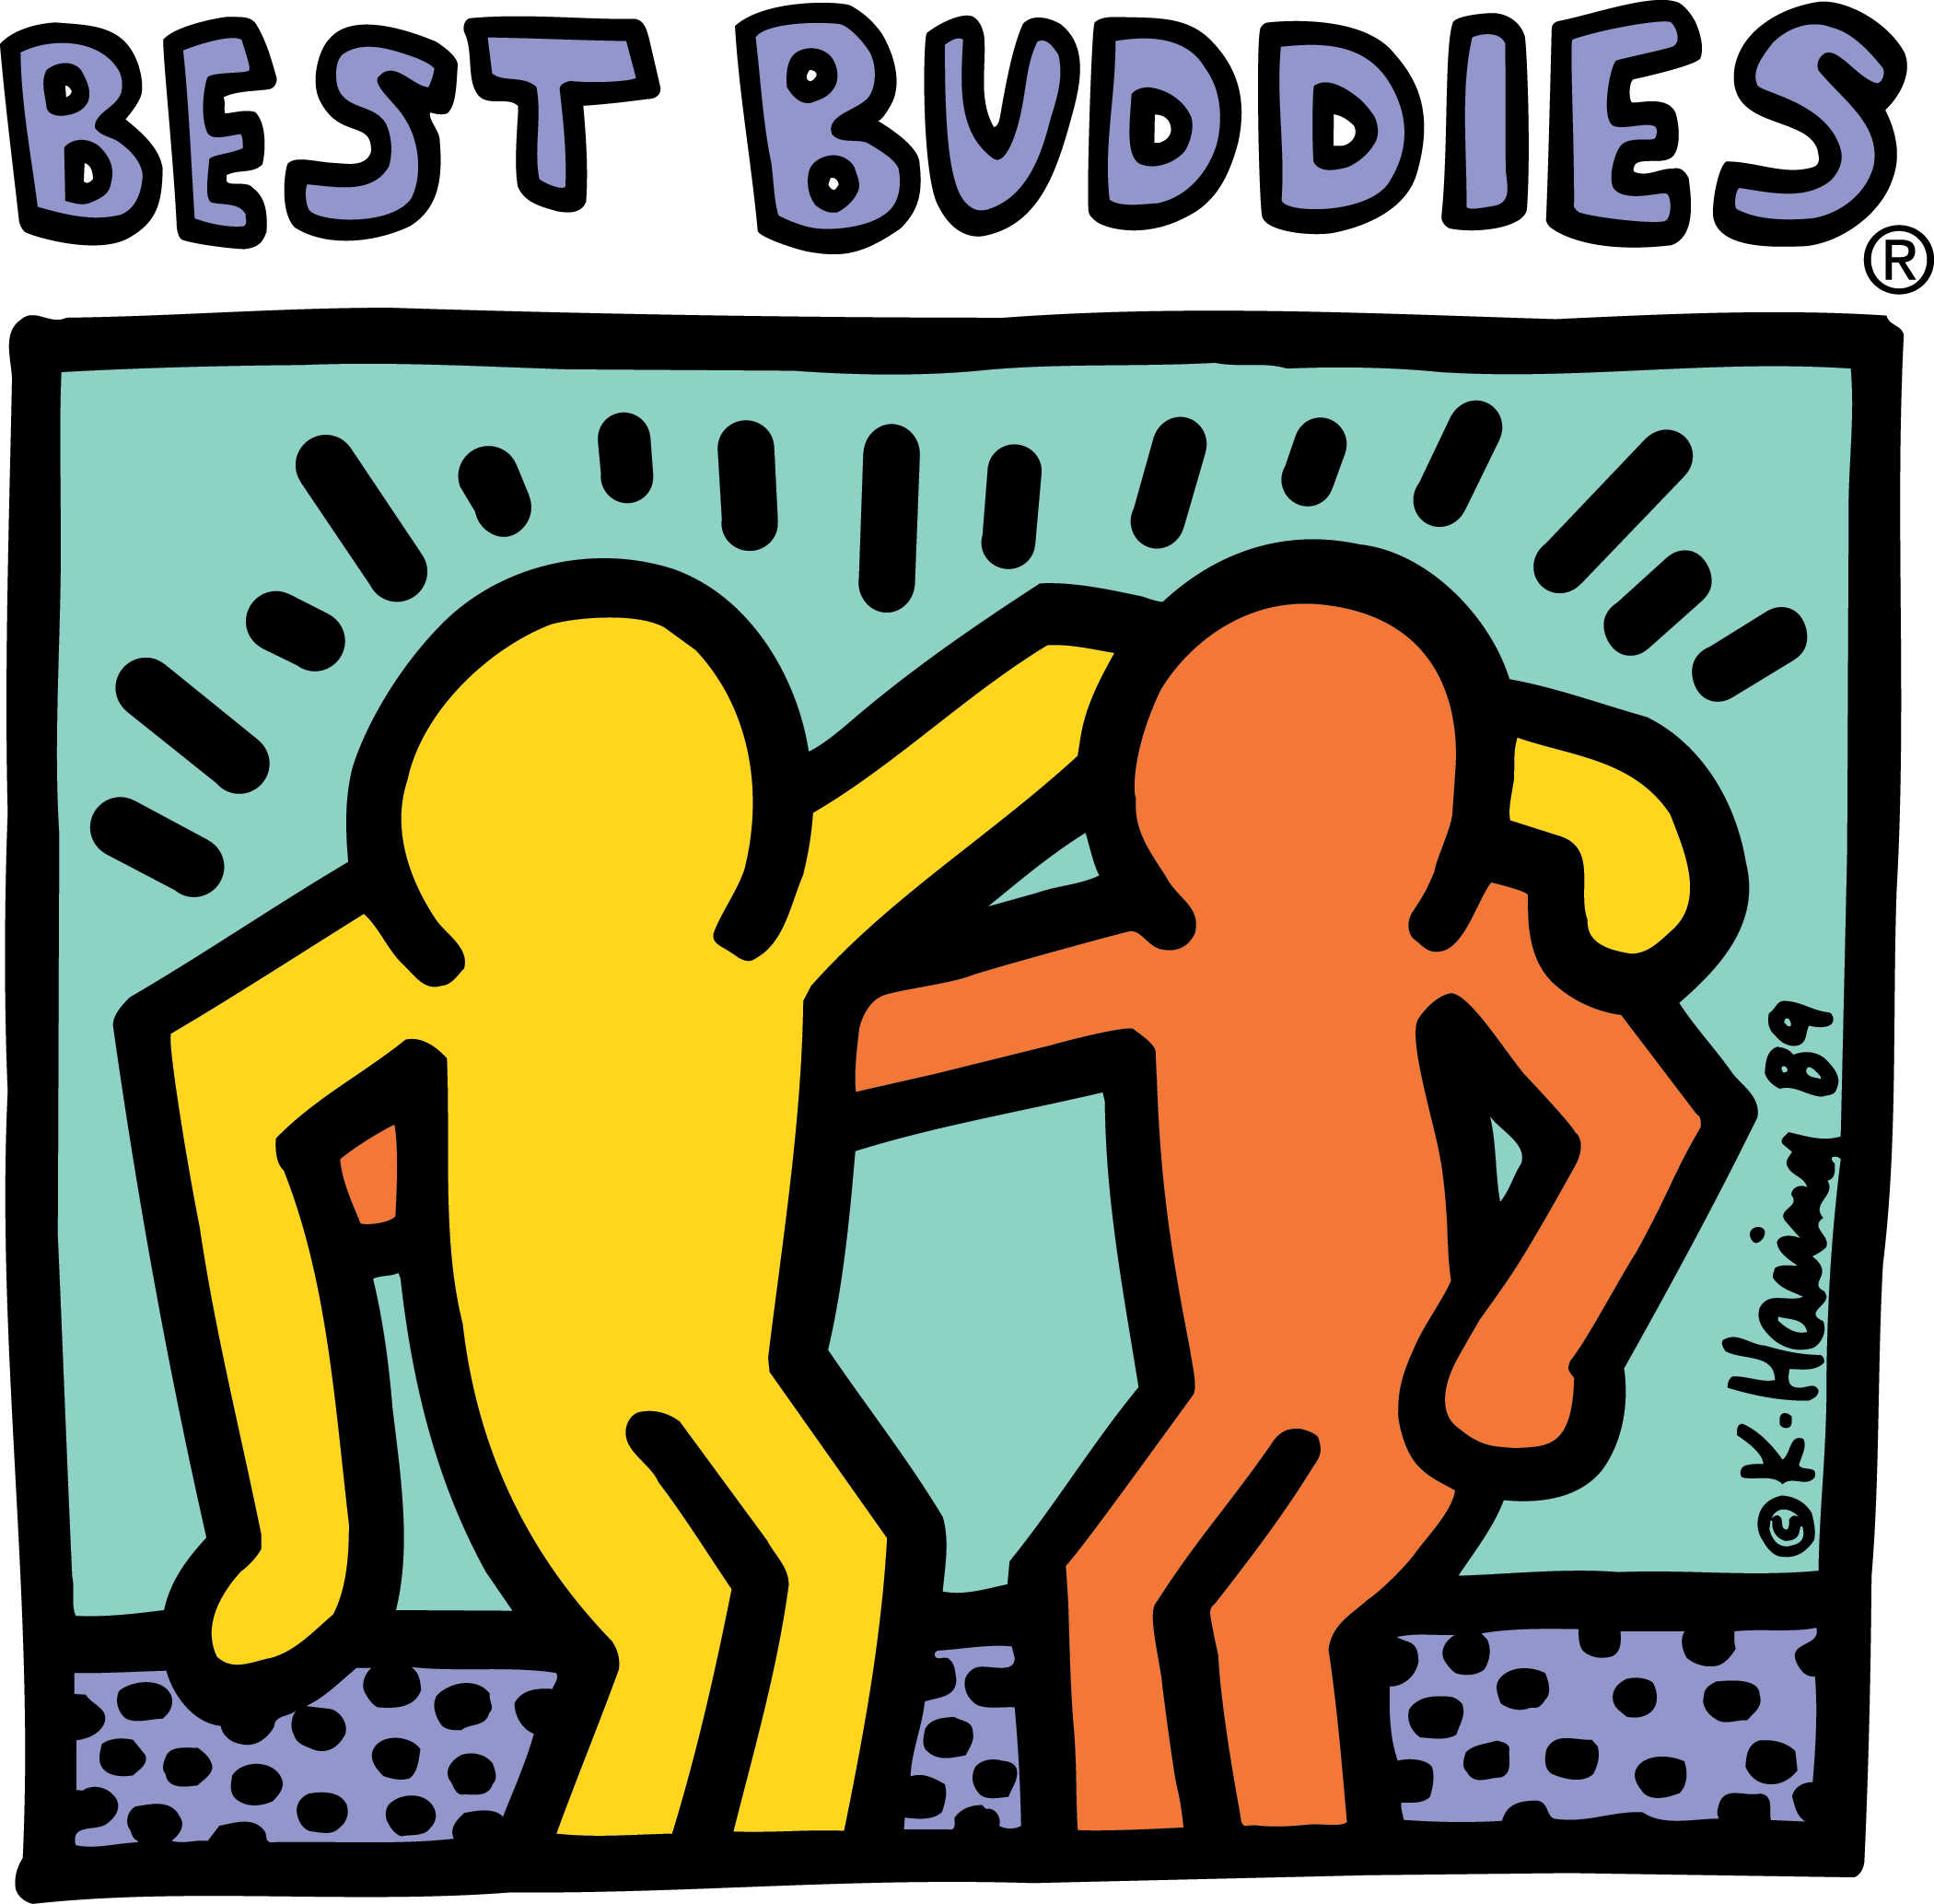 Buddies Logo - Best Buddies Logo Color CMYK CVC - The Paramount Group